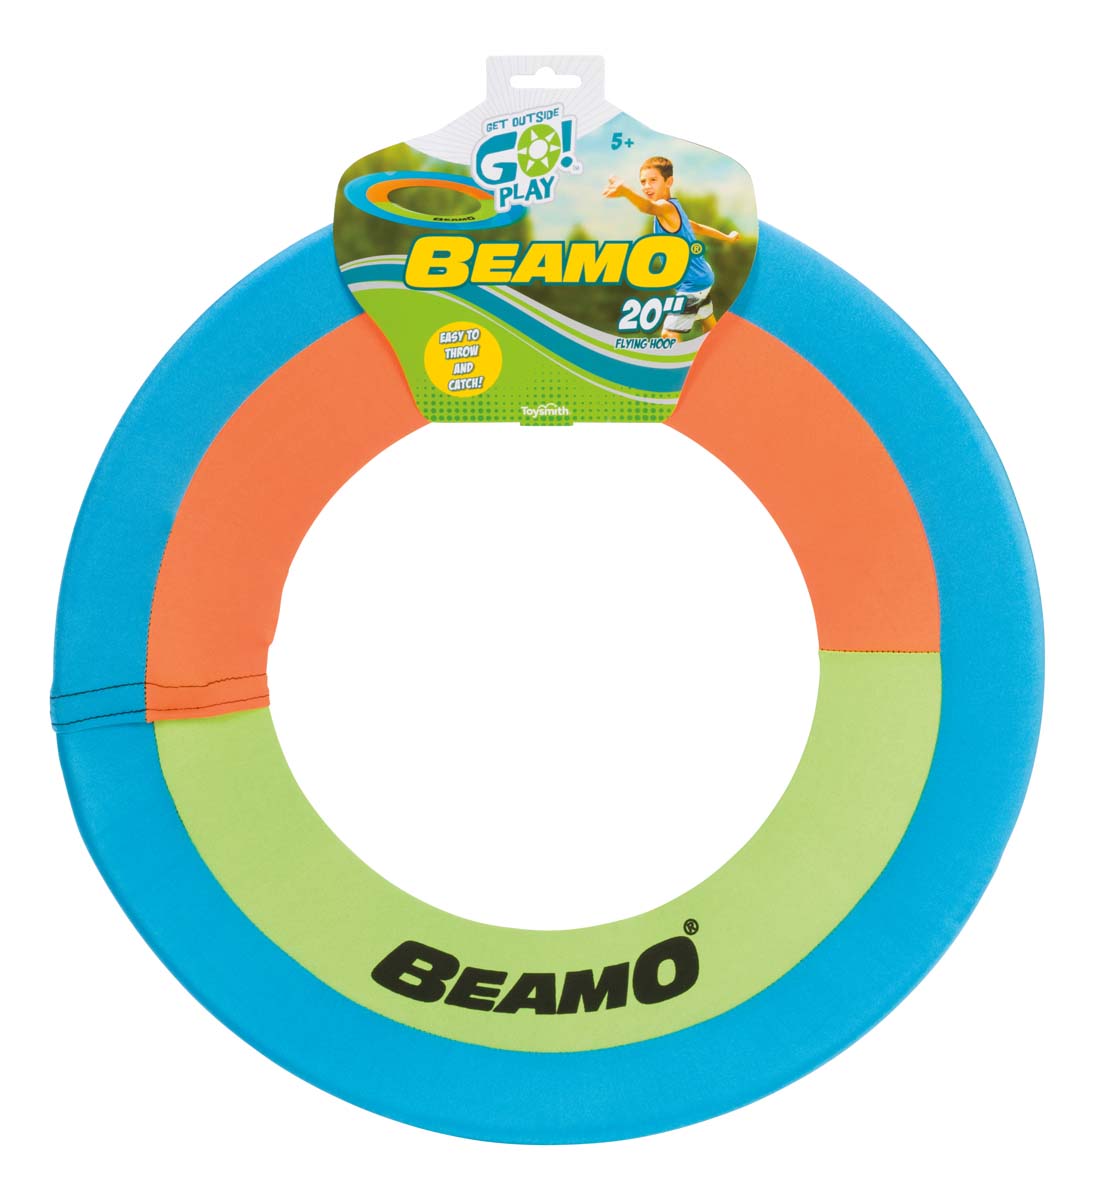 GO! Play Beamo 20" Flying Disc